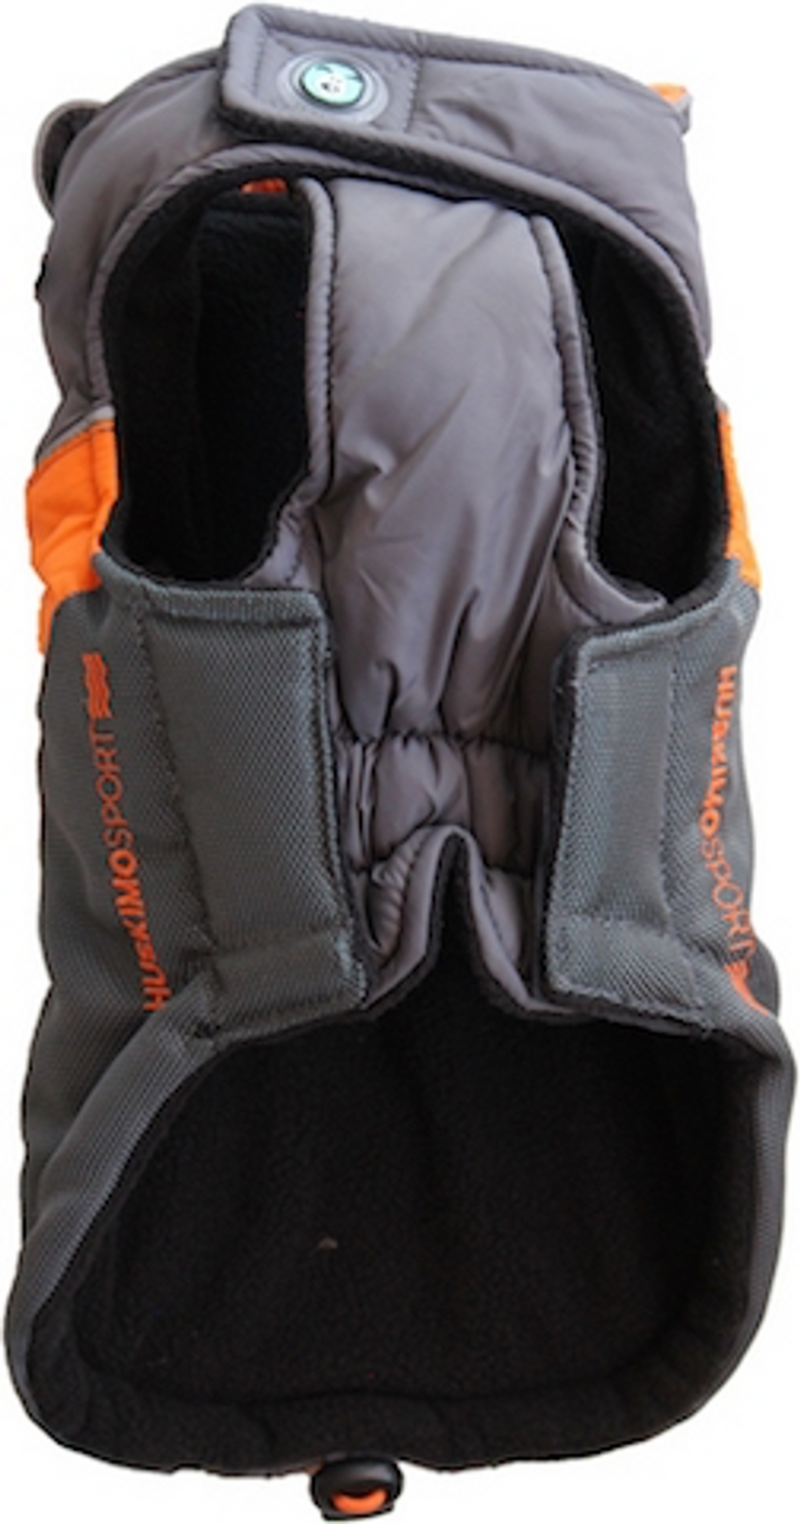 Huskimo Dog Coat Sherpa Sport Orange underside, pet essentials warehouse